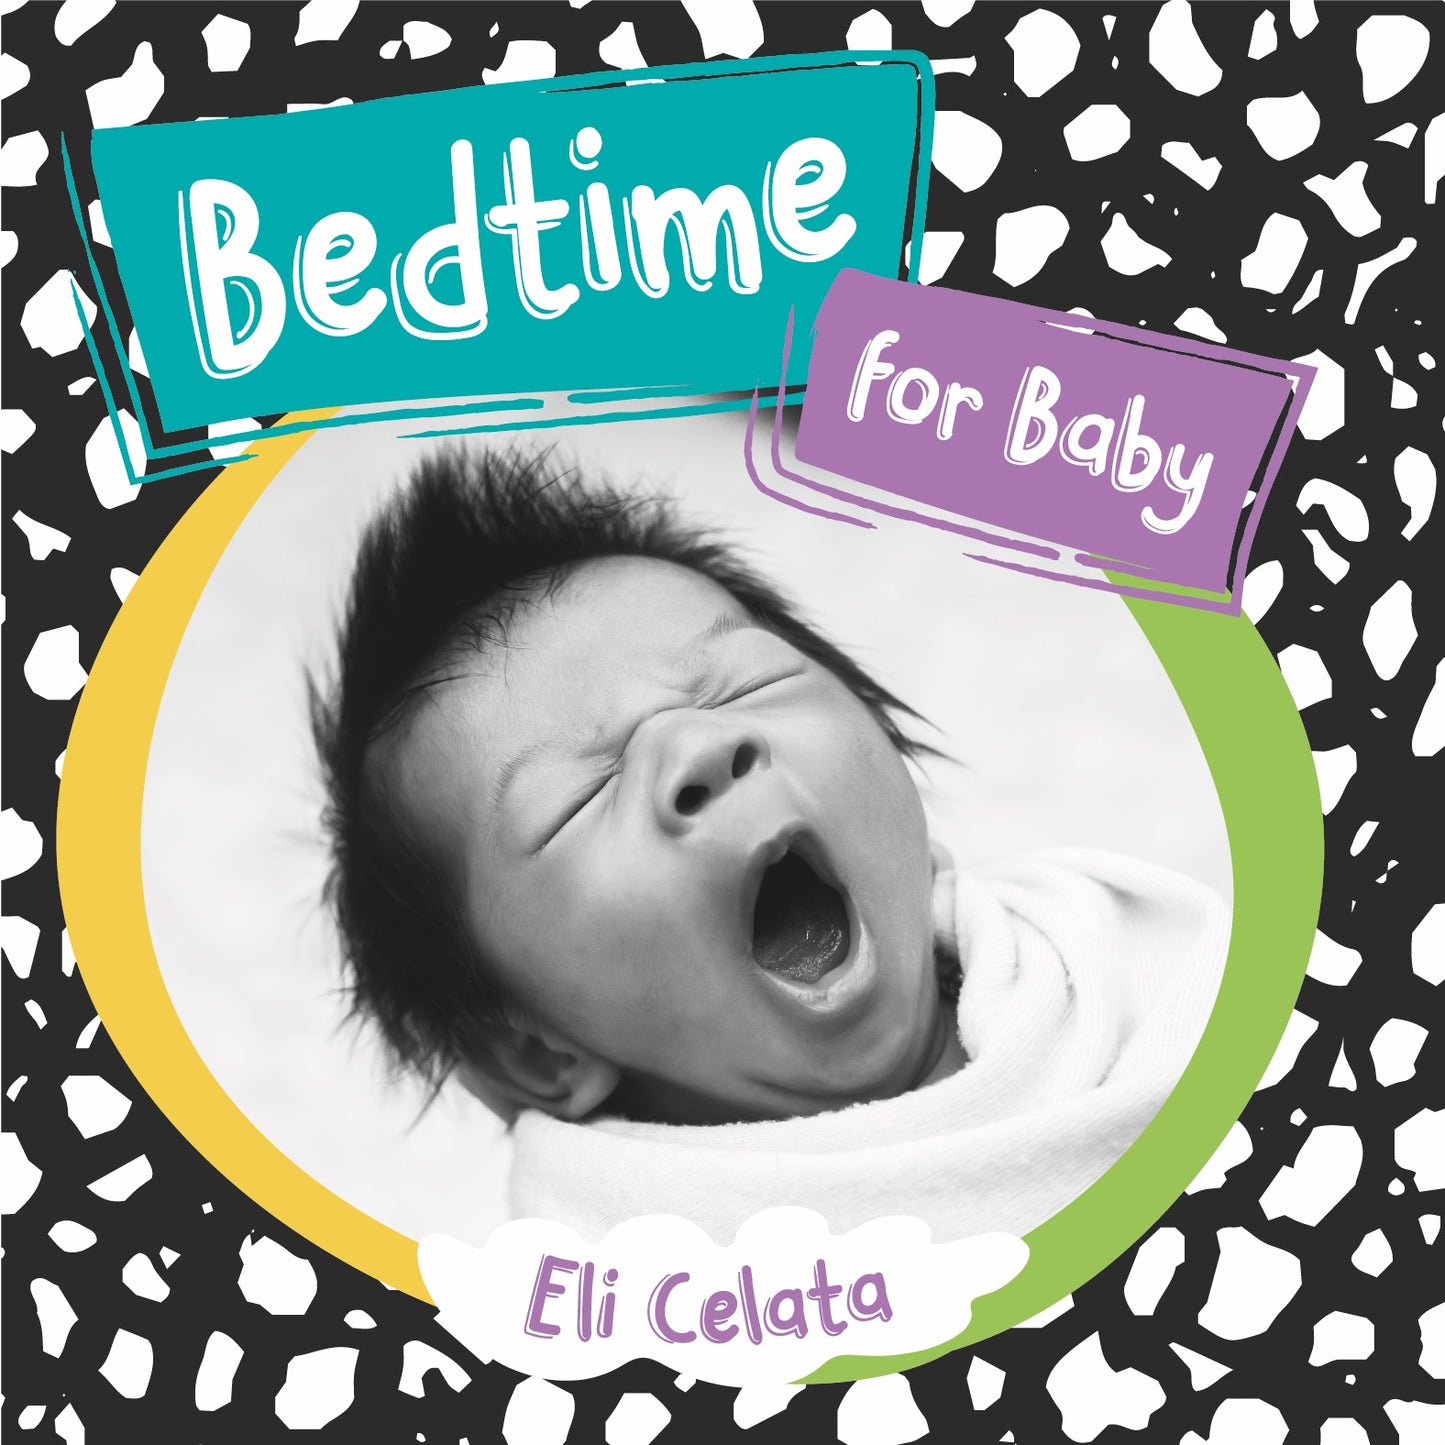 Bedtime for Baby/A dormir, bebe